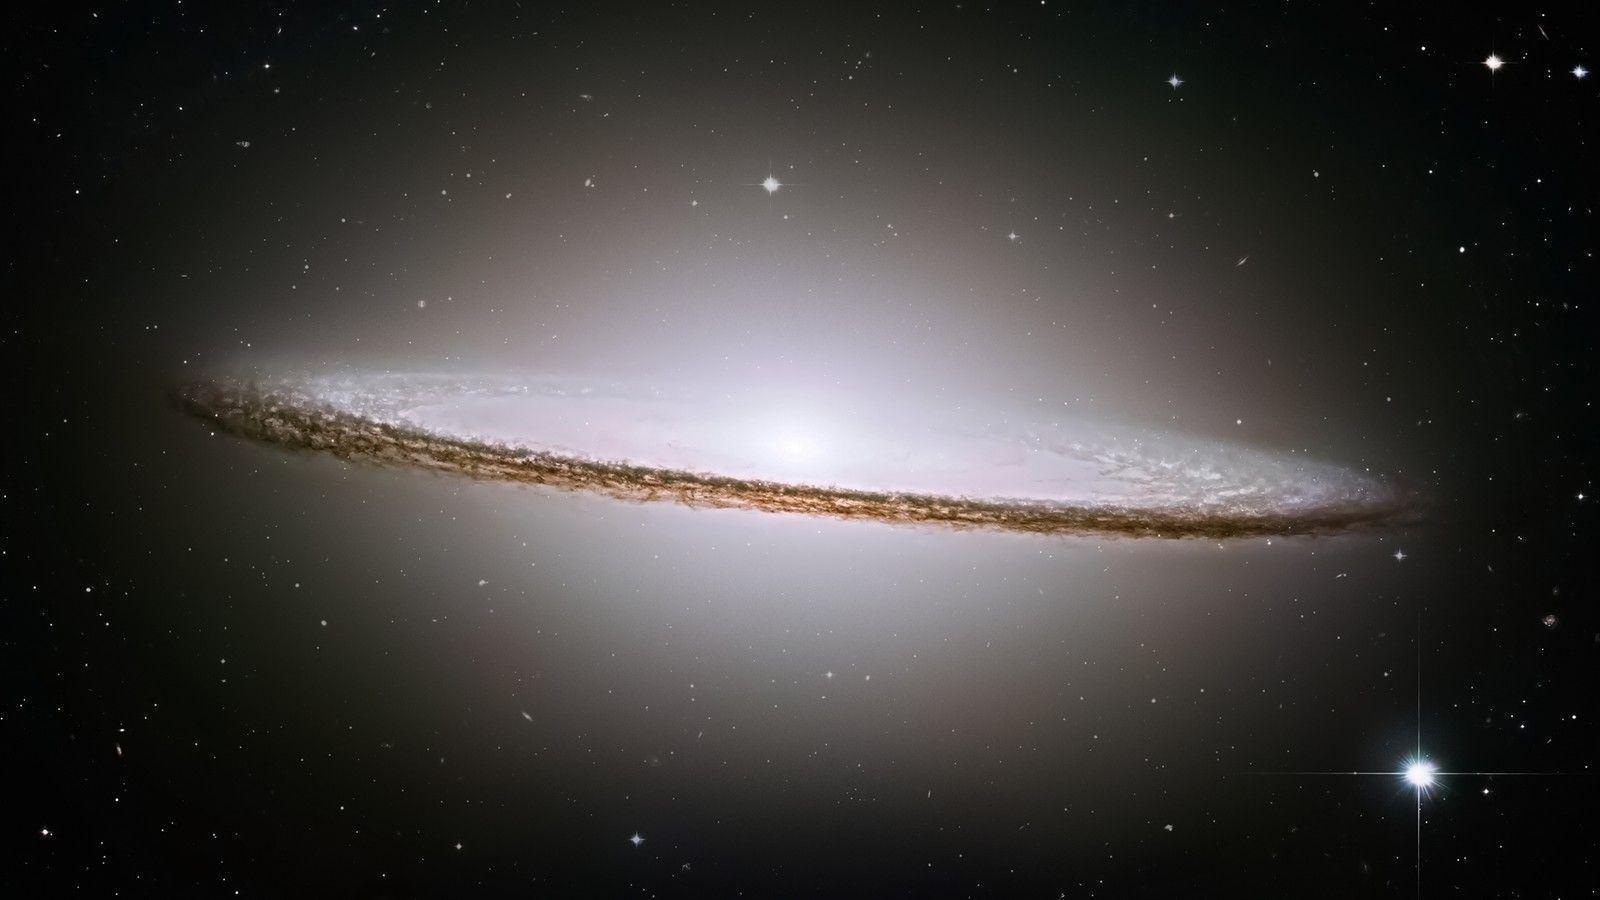 Sombrero galaxy (M) is a bright spiral galaxy 31727